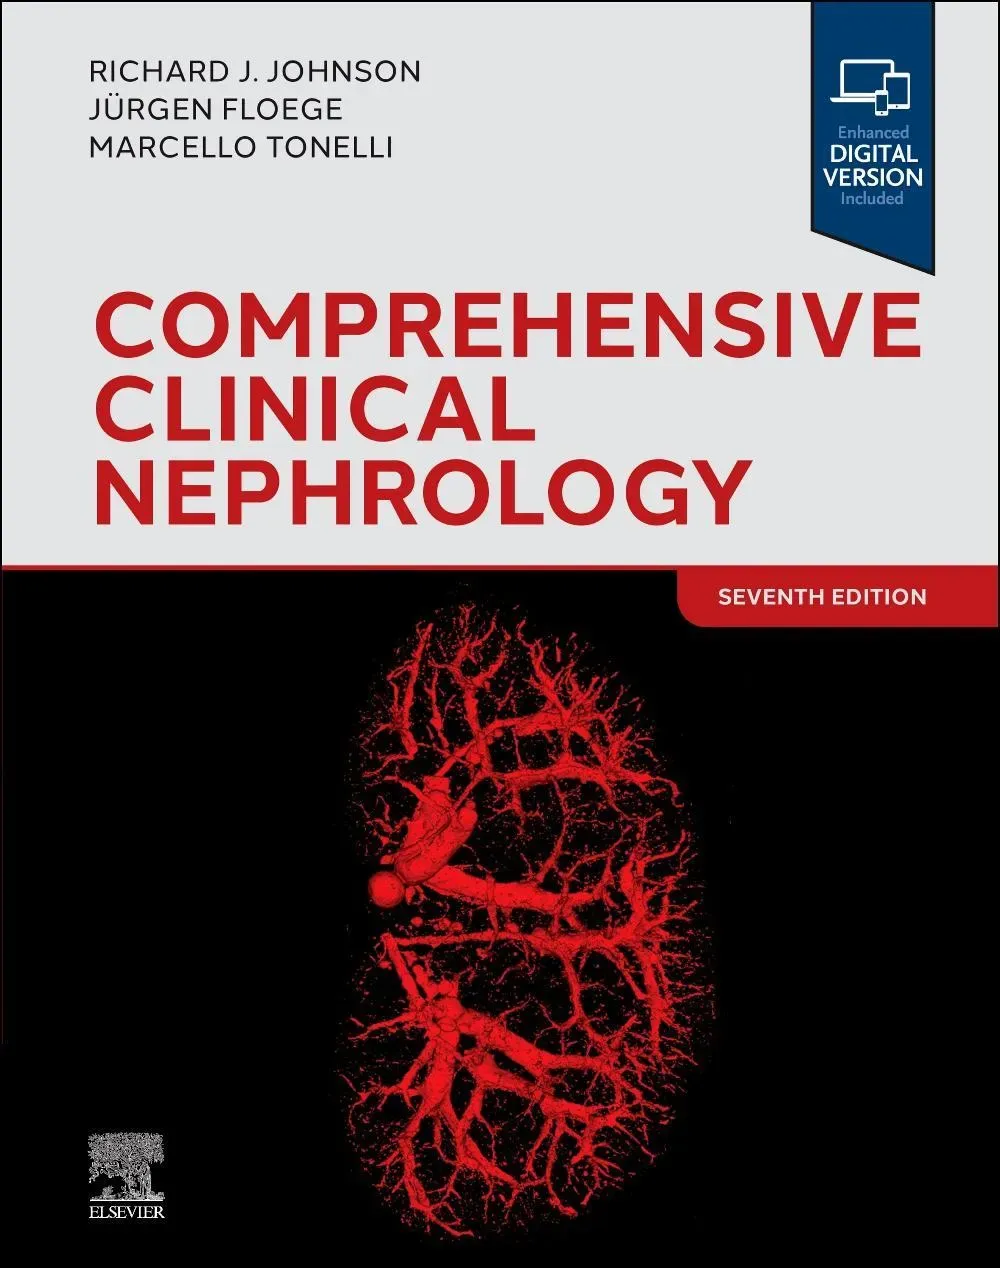 Comprehensive Clinical Nephrology - Richard J. Johnson  Jurgen Floege  Marcello Tonelli  Gebunden